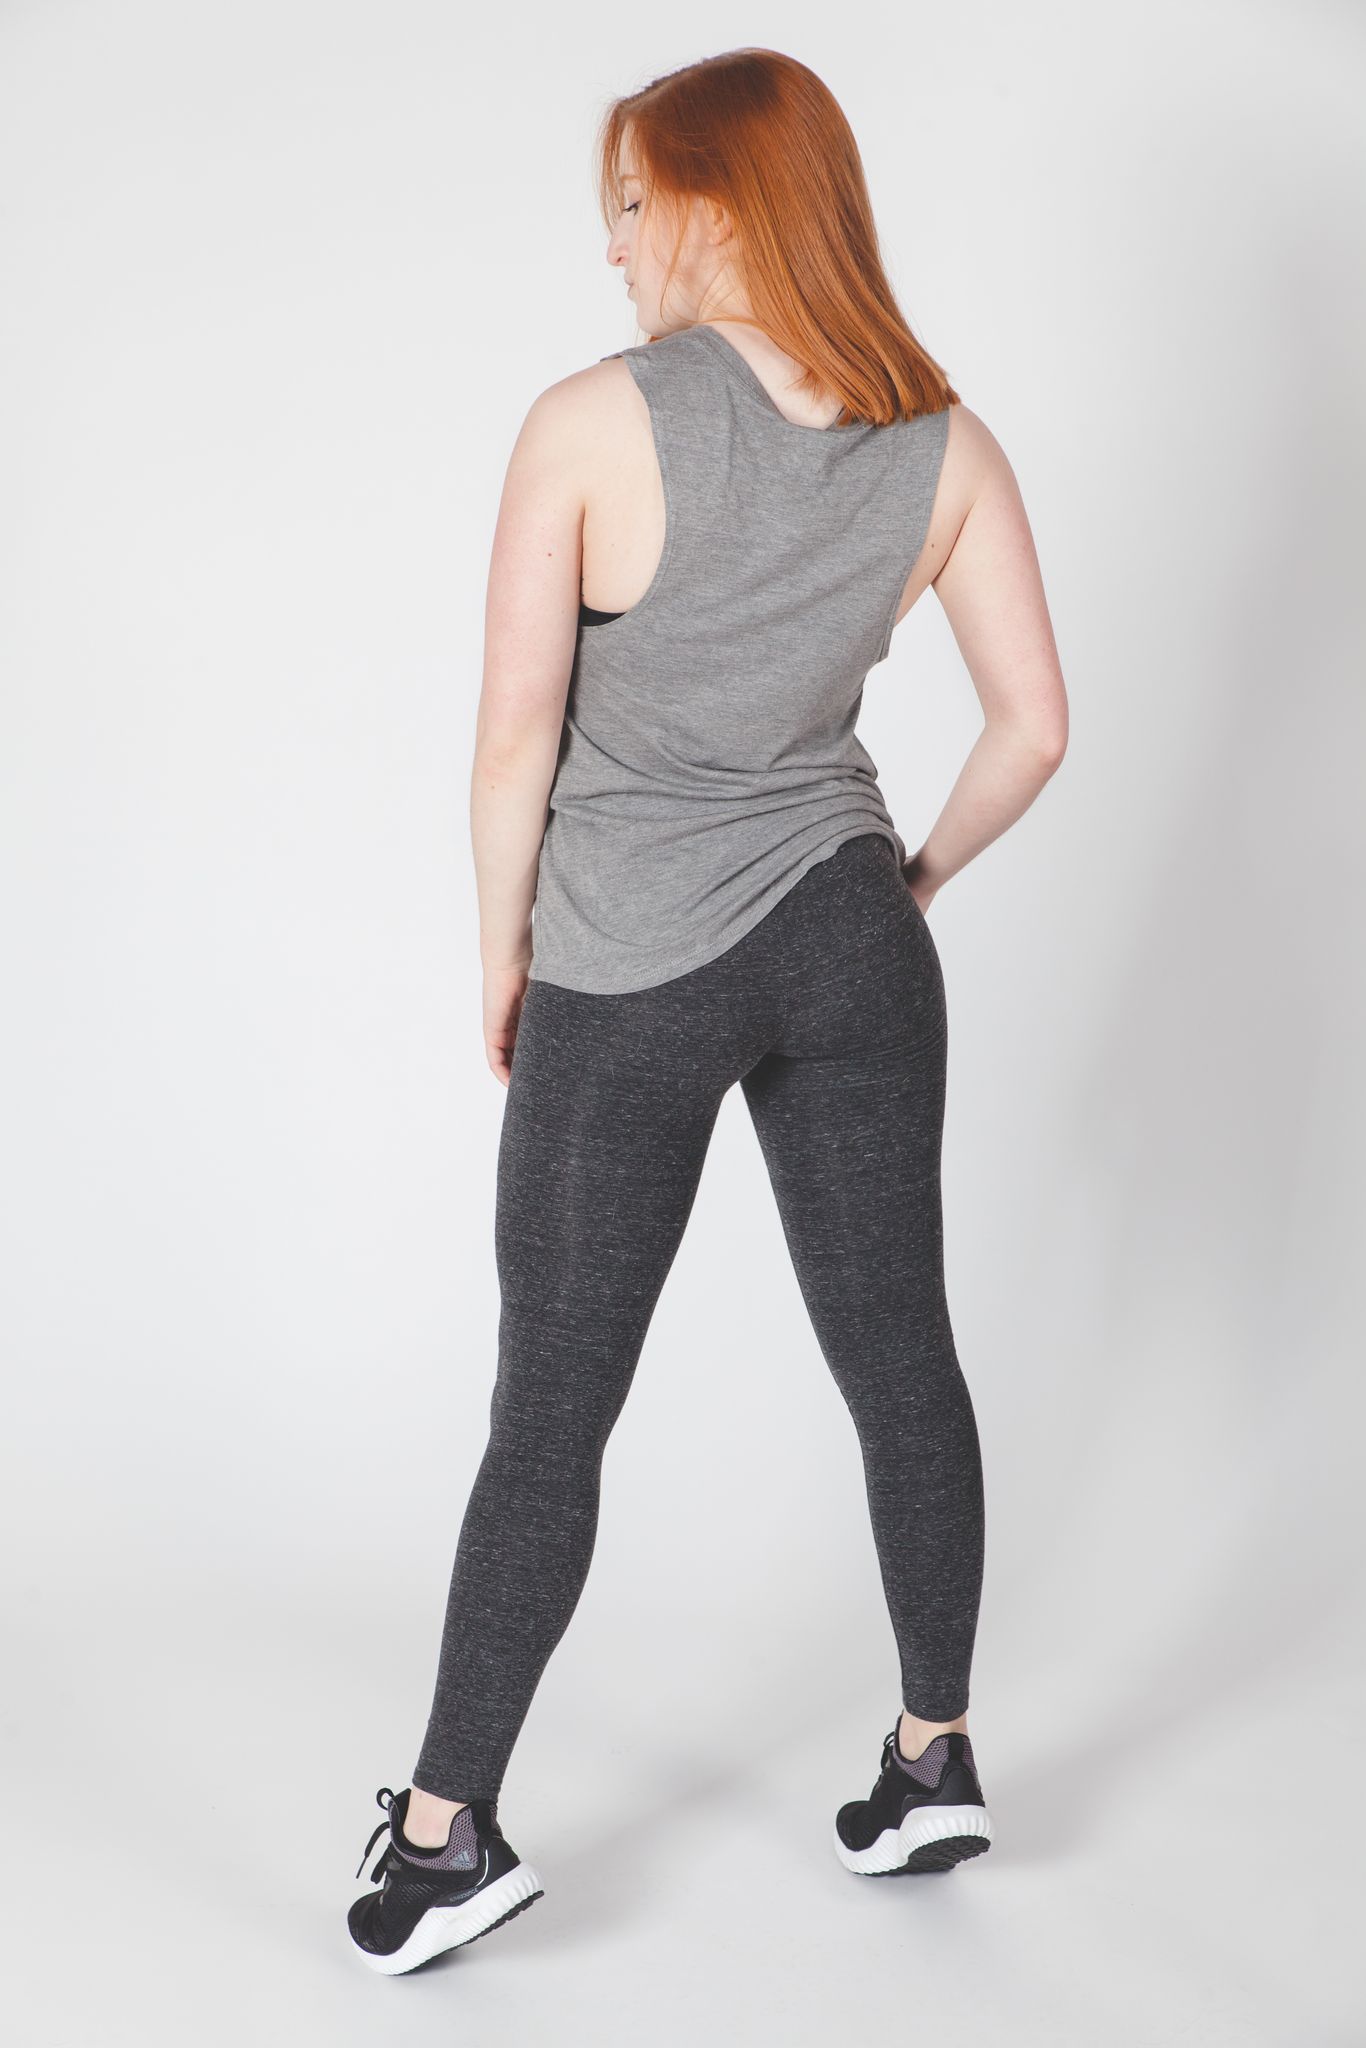 Magnolia Leggings - Organic Cotton High Waist Yoga Pants for Women